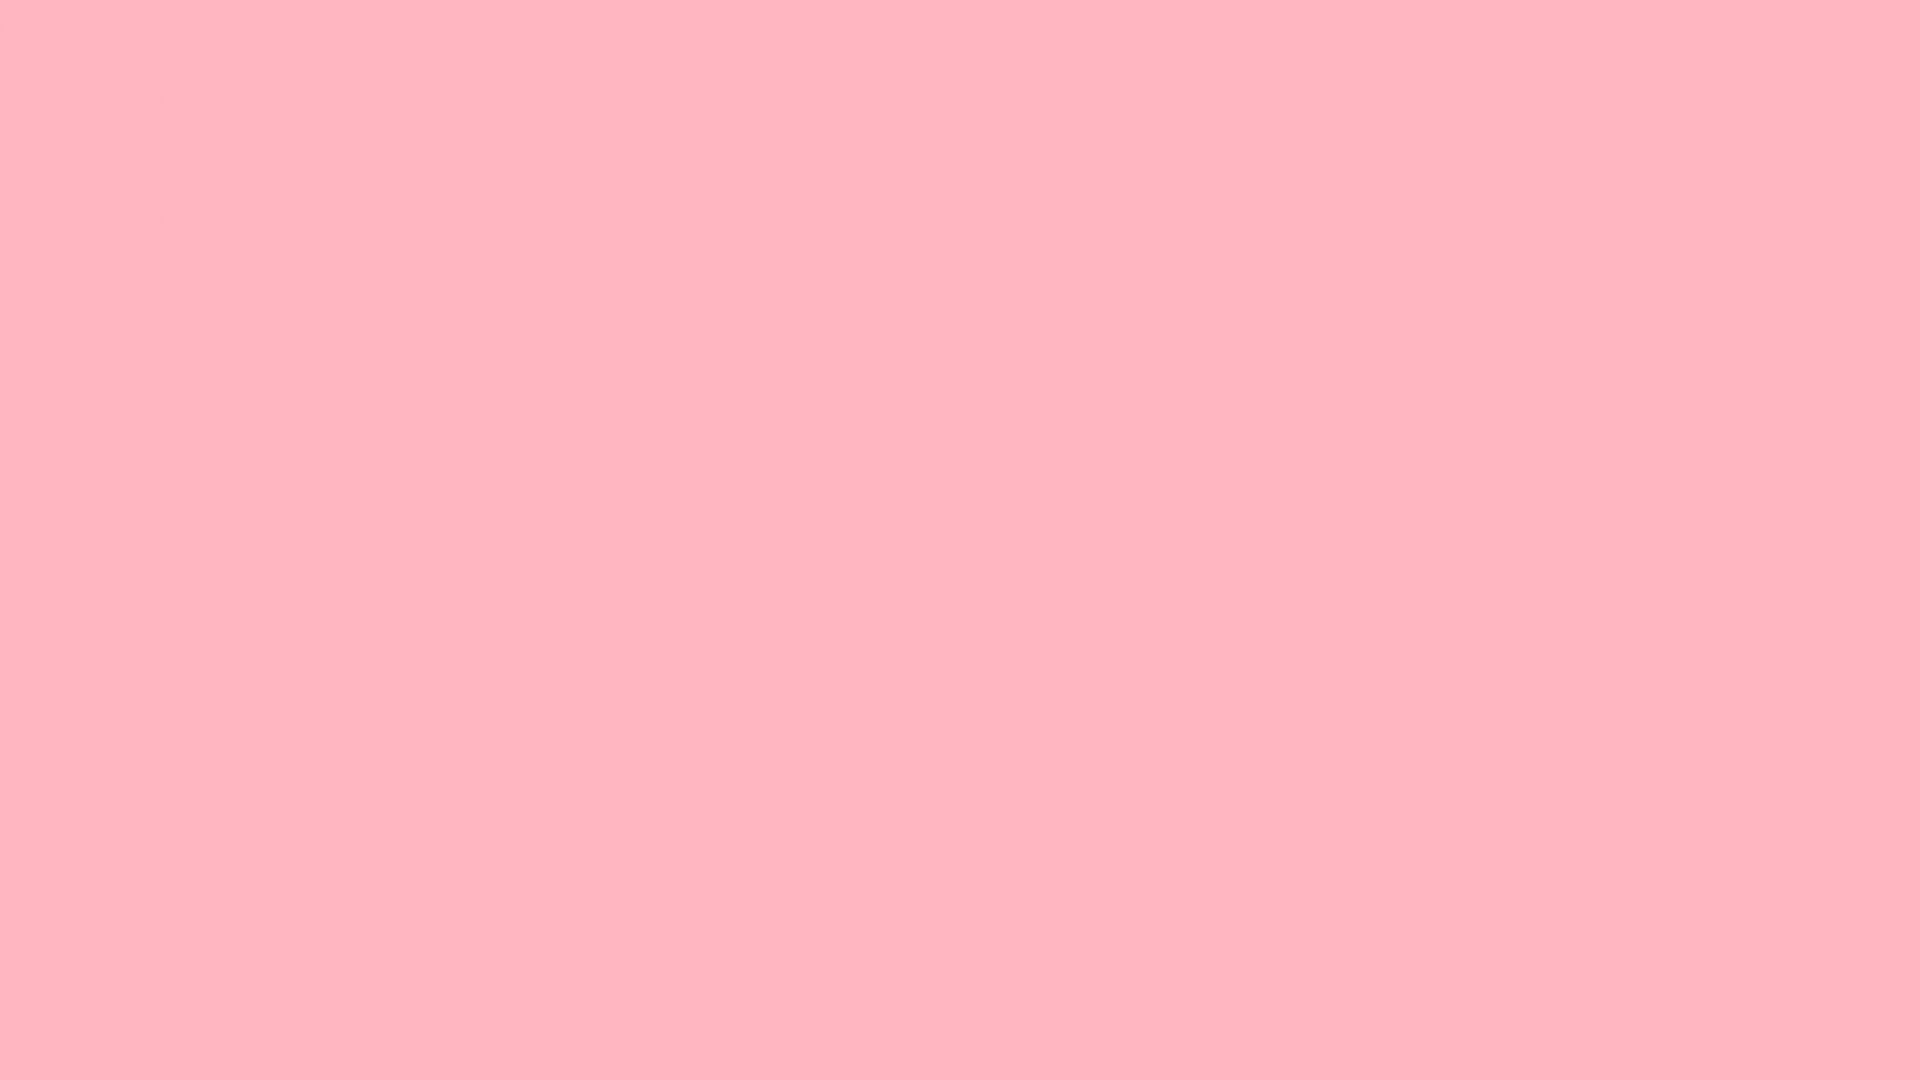 Light Pink Background Tumblr, To get .imagesjameson.vercel.app